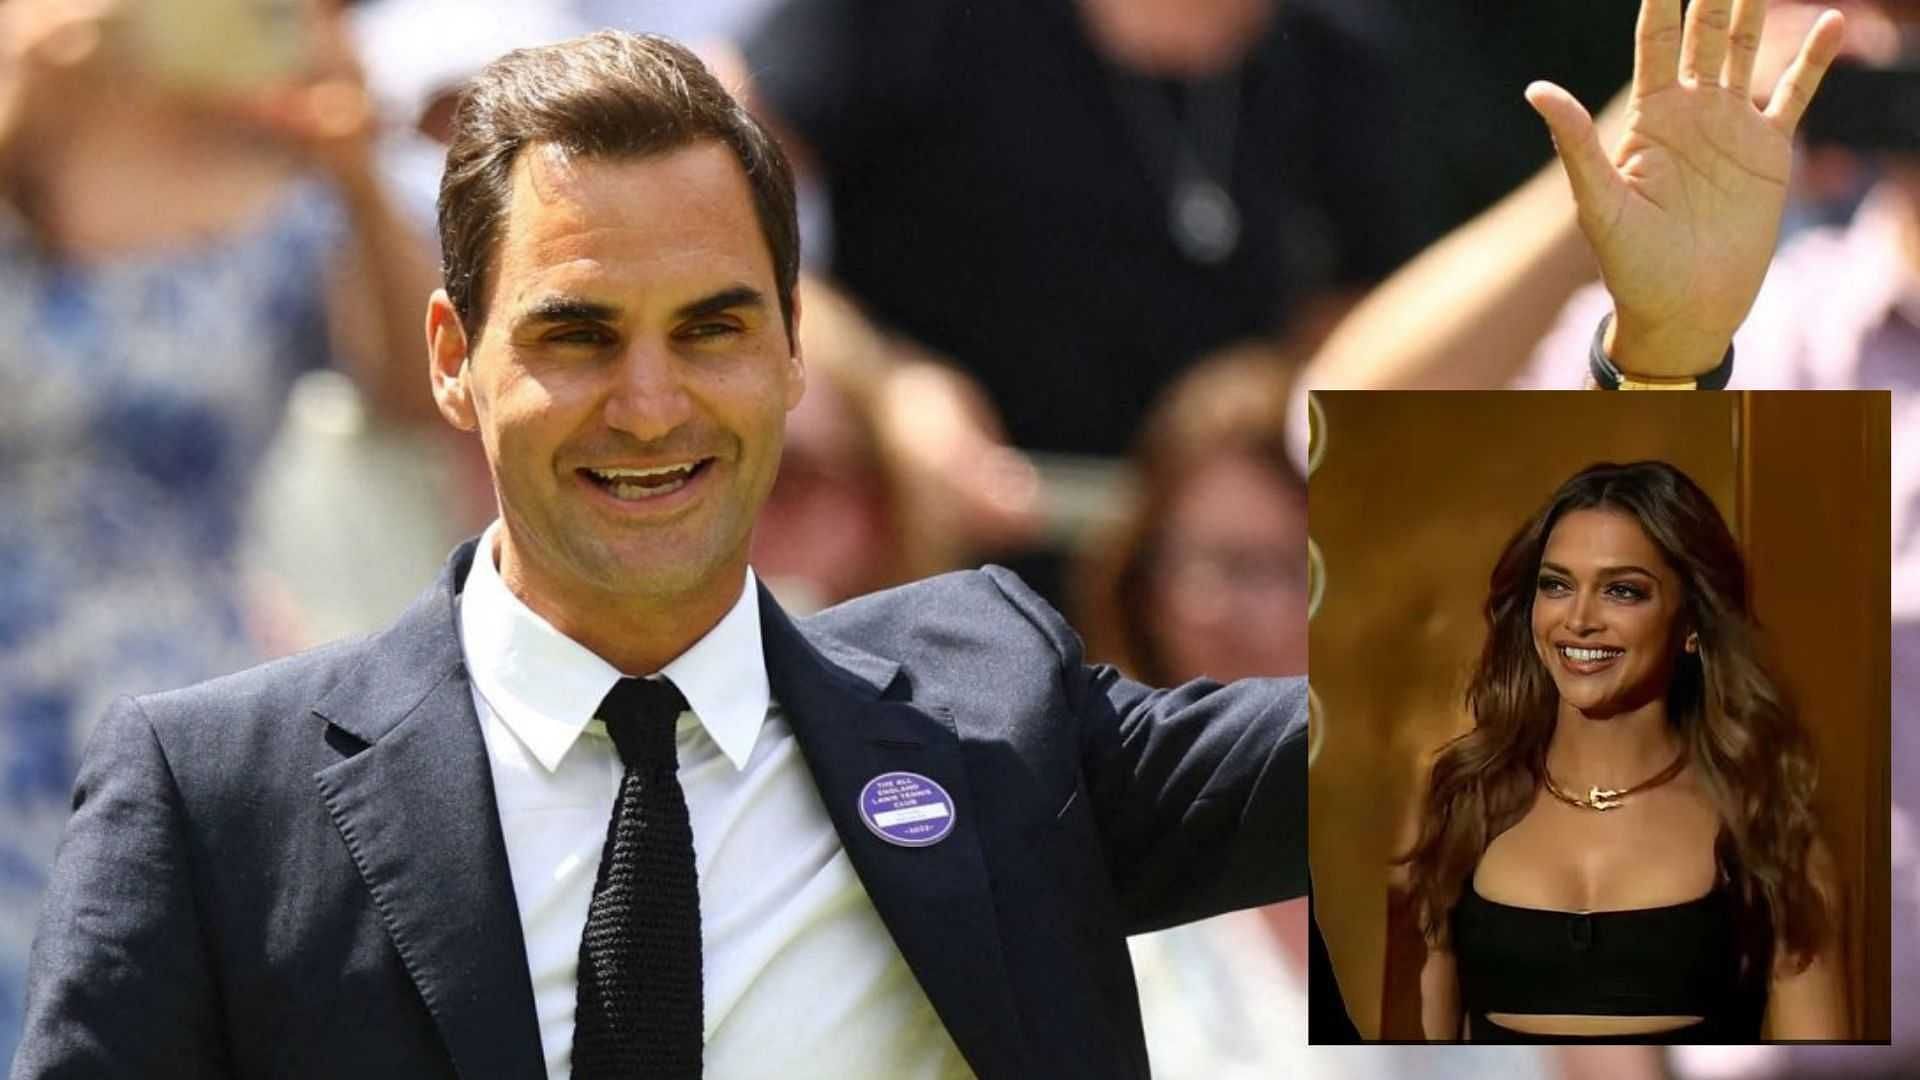 Deepika Padukone mentions Riger Federer as her inspiration